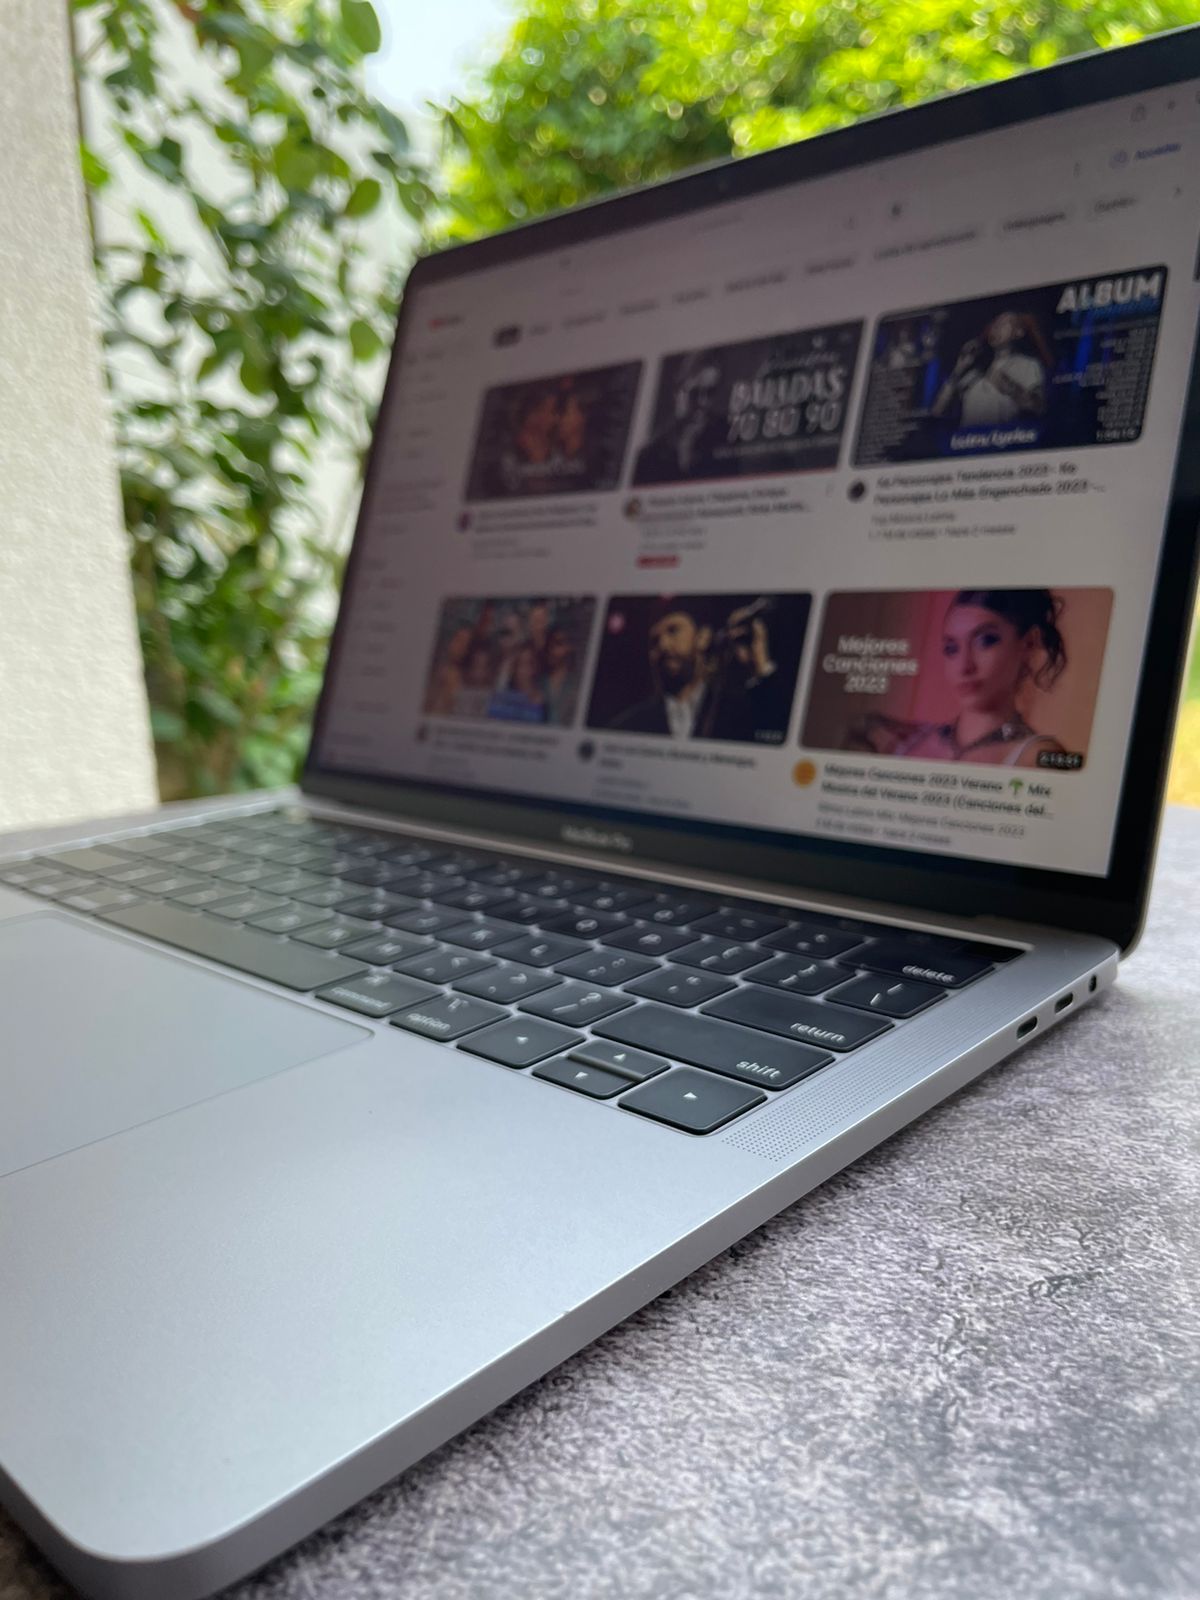 Macbook Pro 2018 - 512GB, i5, 16GB